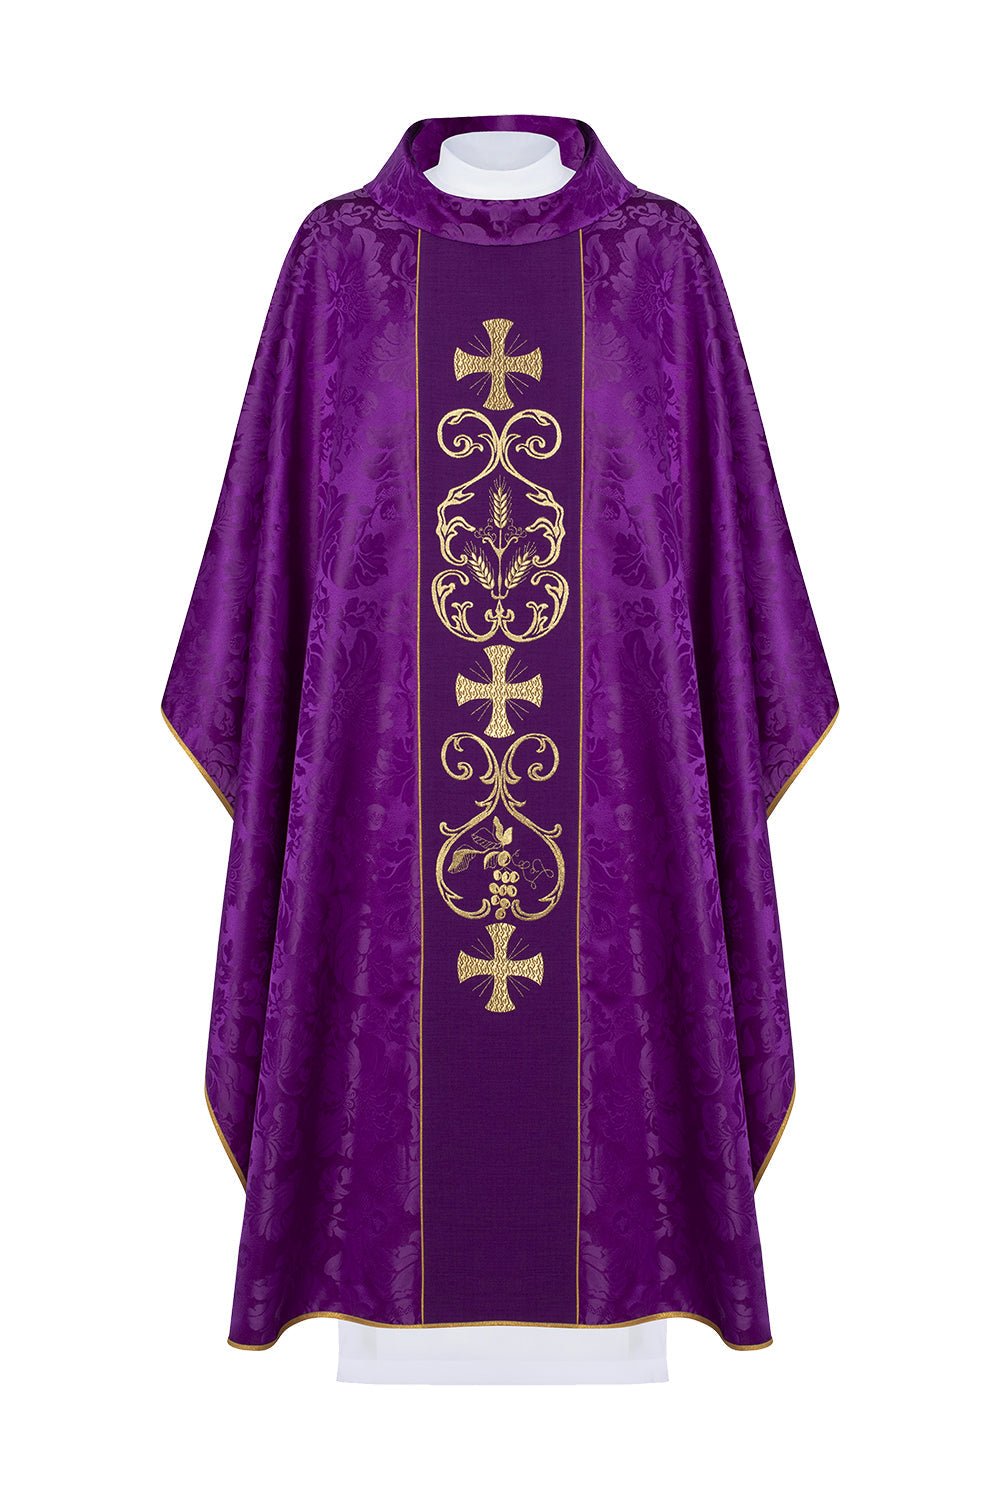 Fioletowy ornat liturgiczny zdobiony haftowanym pasem